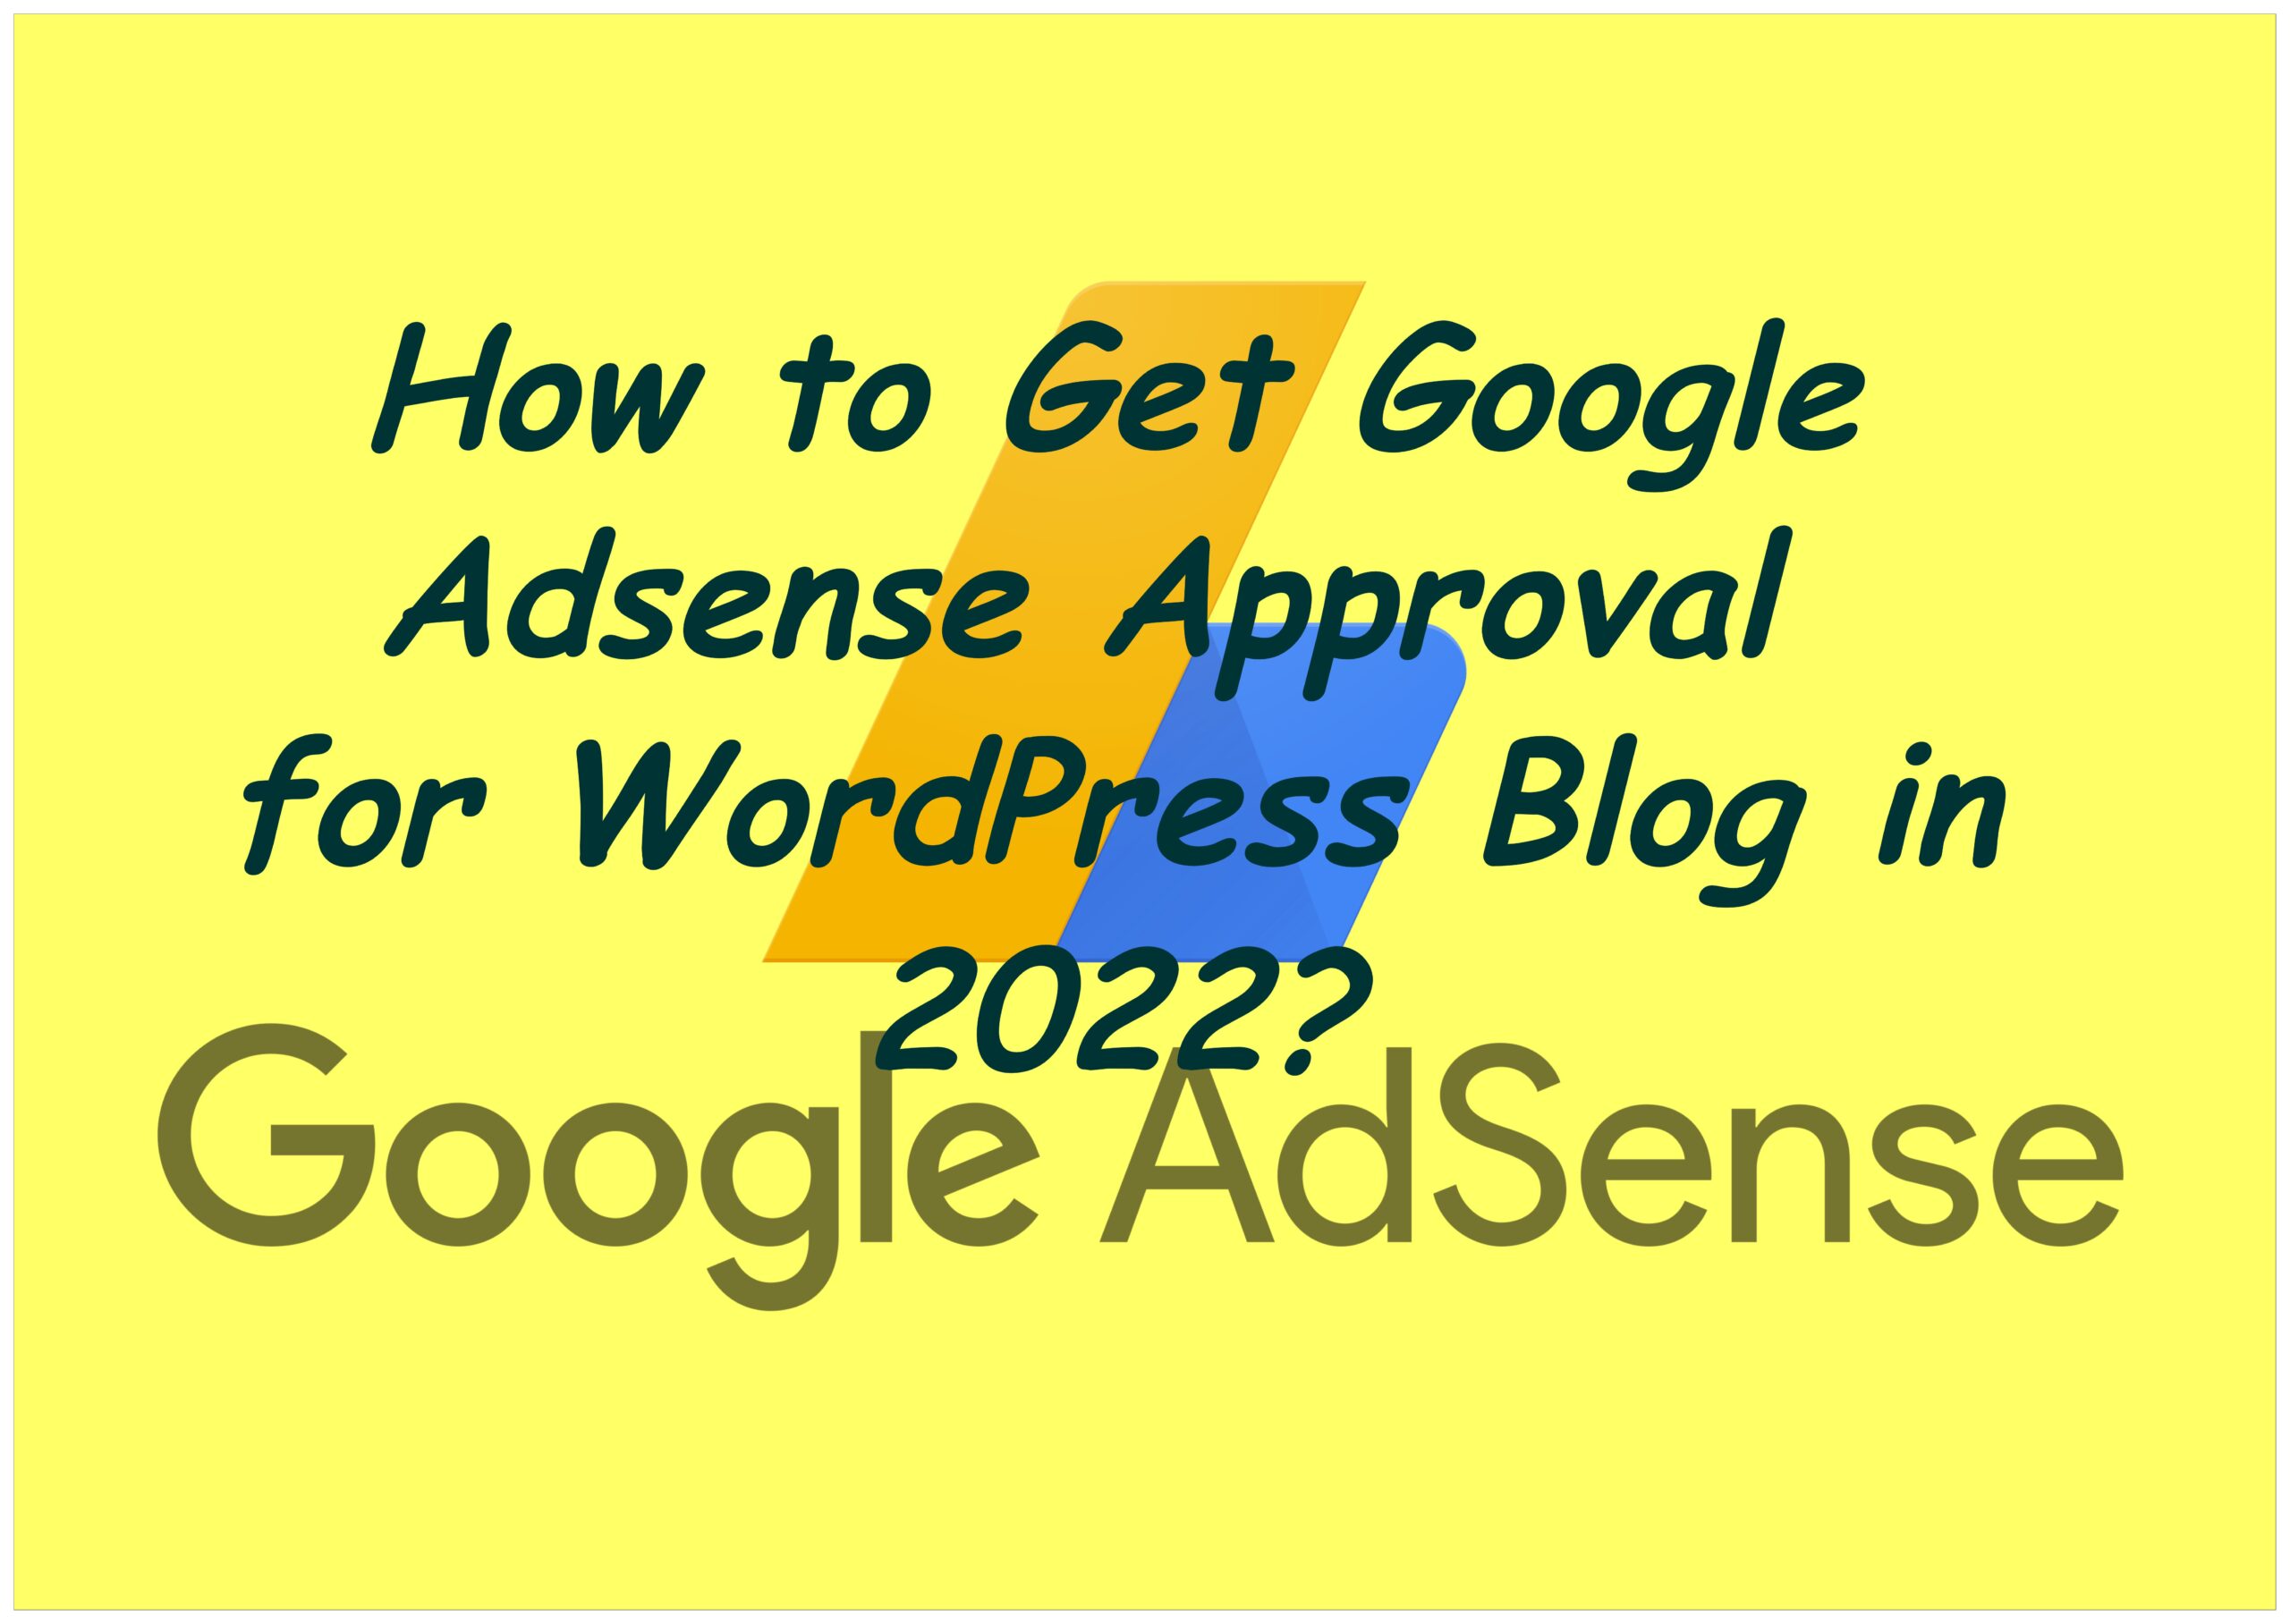 Google Adsense approval for WordPress